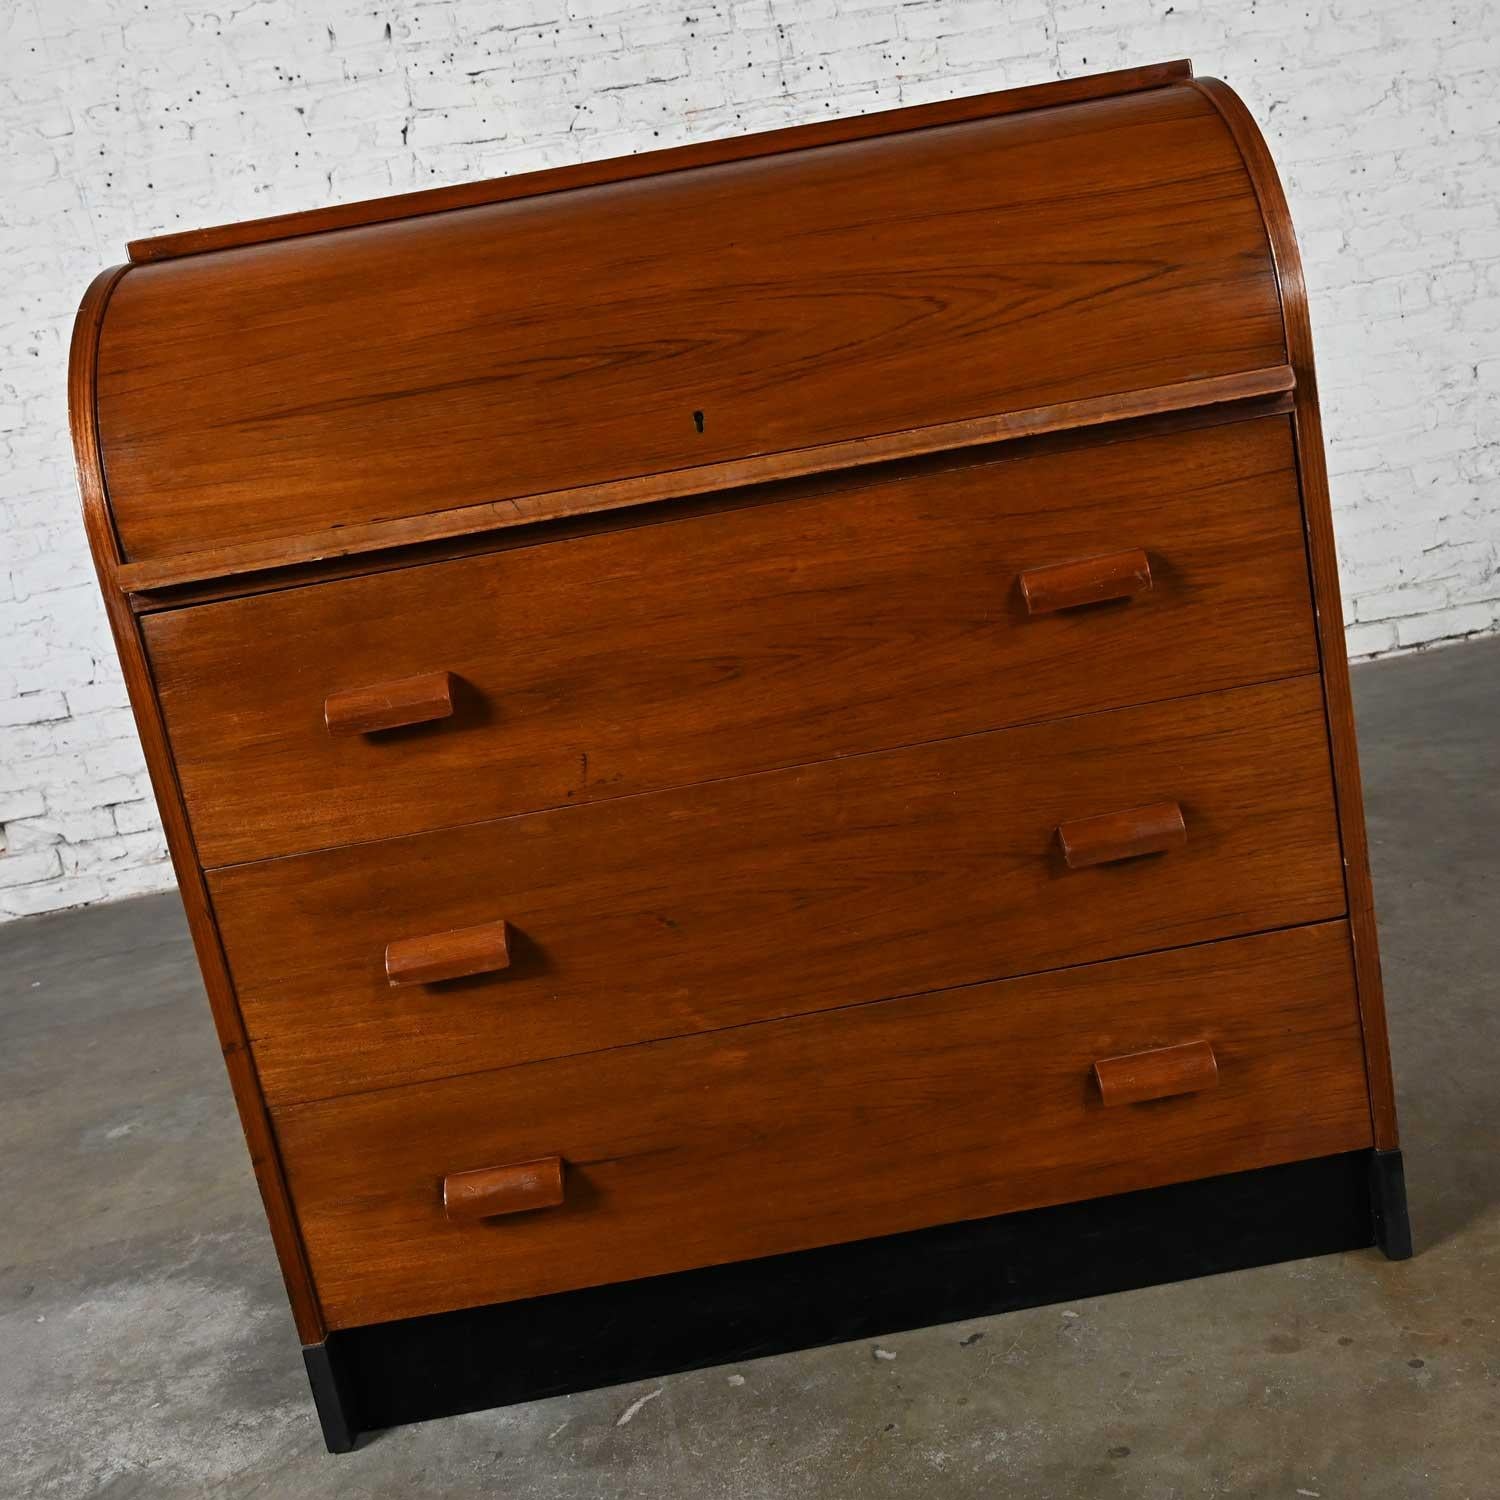 Danish Mid-20th Century Scandinavian Modern Teak Roll Top Desk or Dresser For Sale